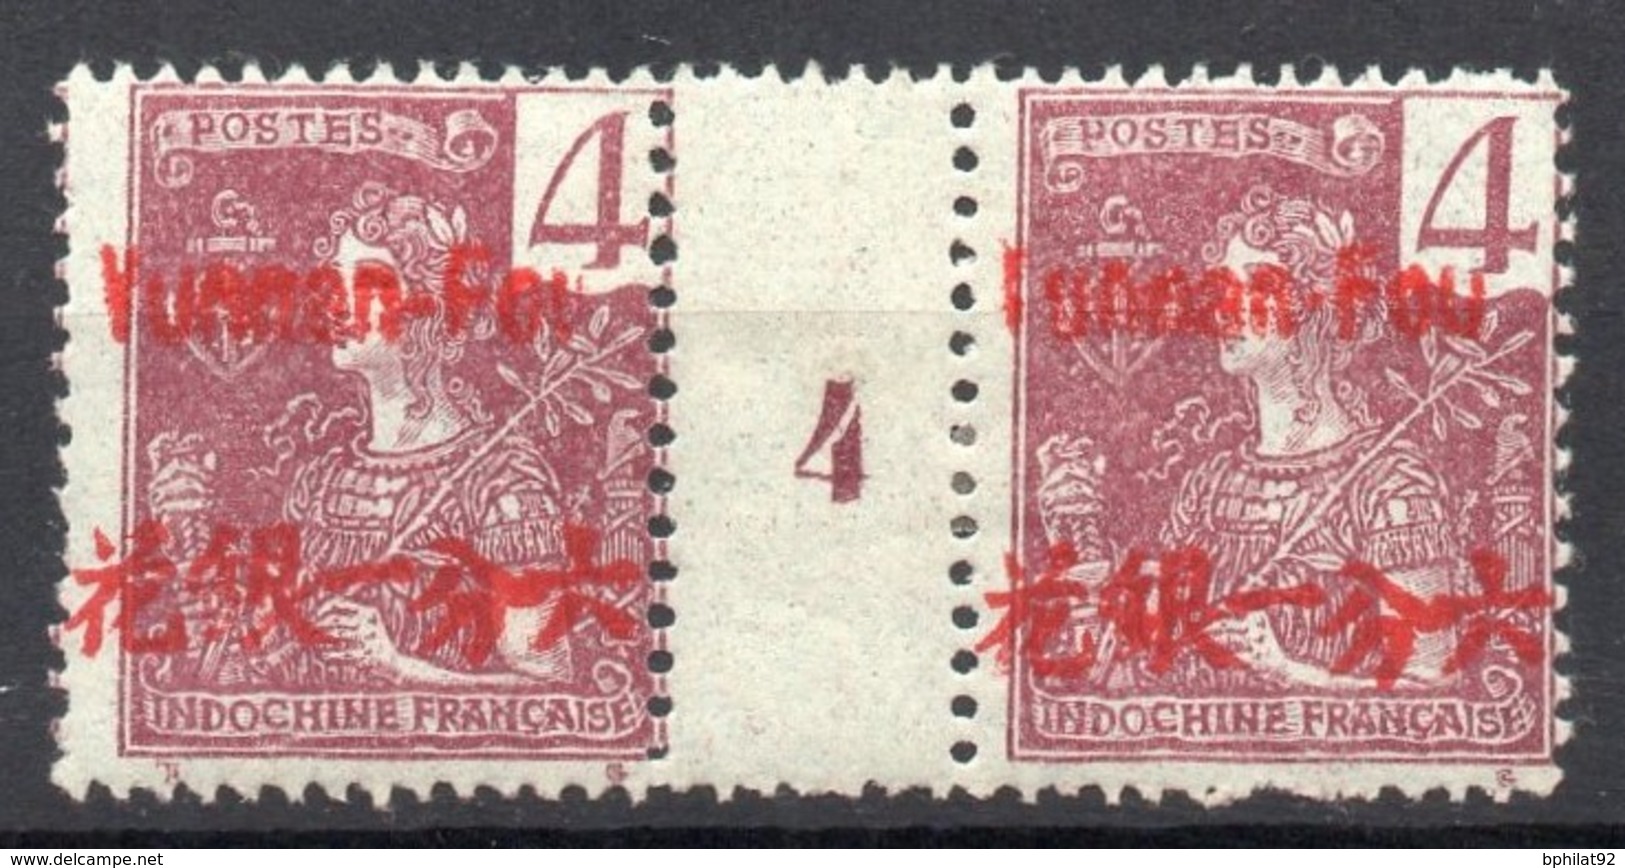 !!! PRIX FIXE : YUNNAFOU, PAIRE DU N°18 AVEC MILLESIME 4 NEUVE * - Unused Stamps